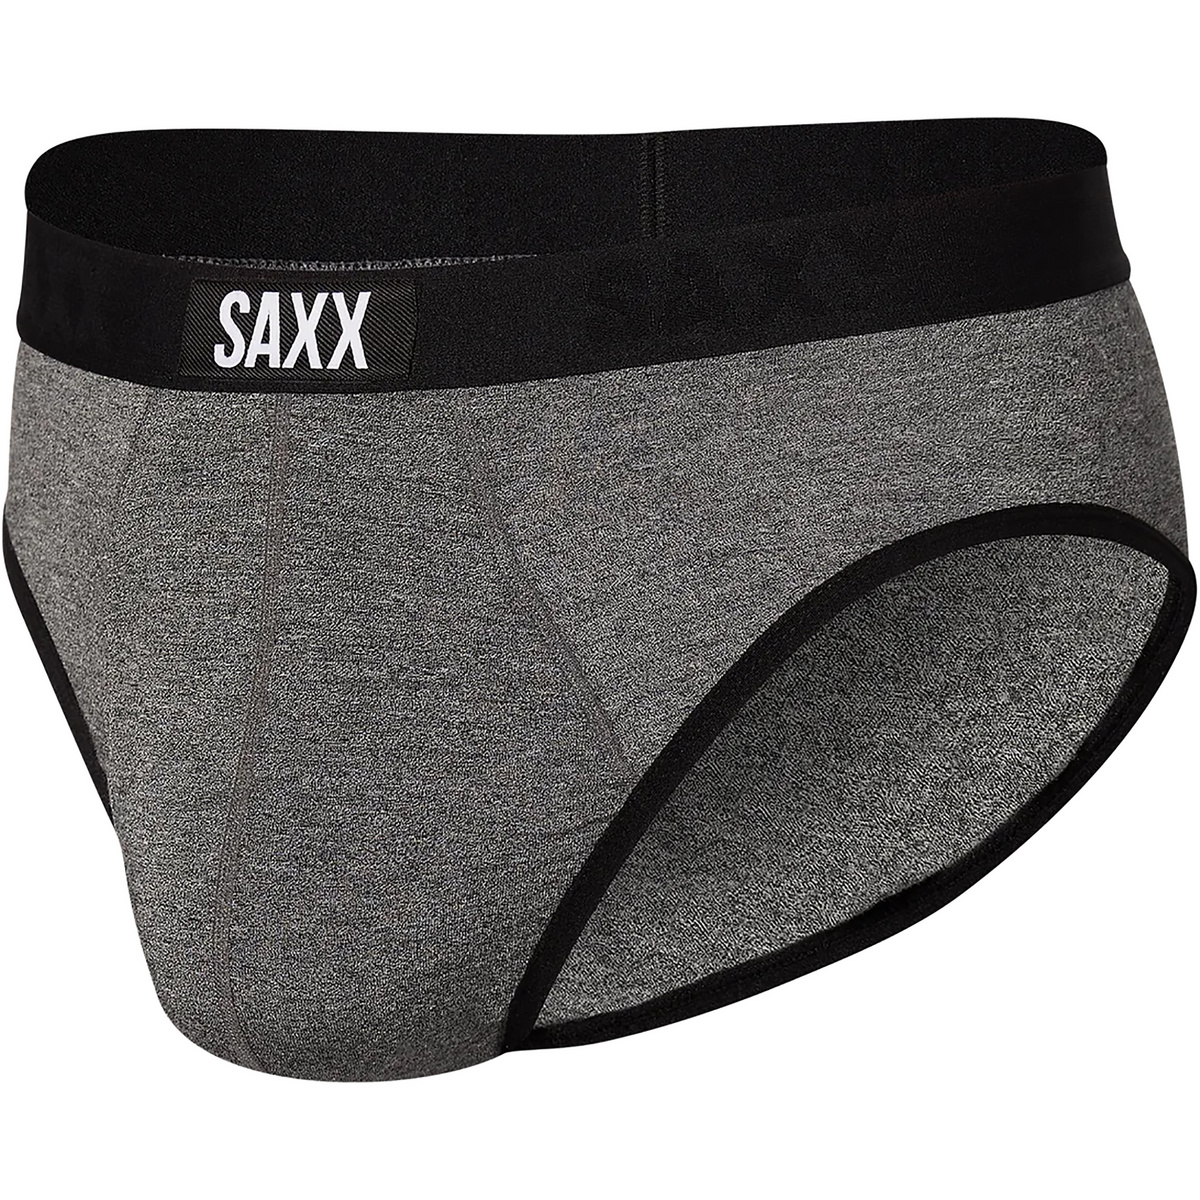 Image of Saxx Underwear Uomo Mutande Ultra Brief Fly